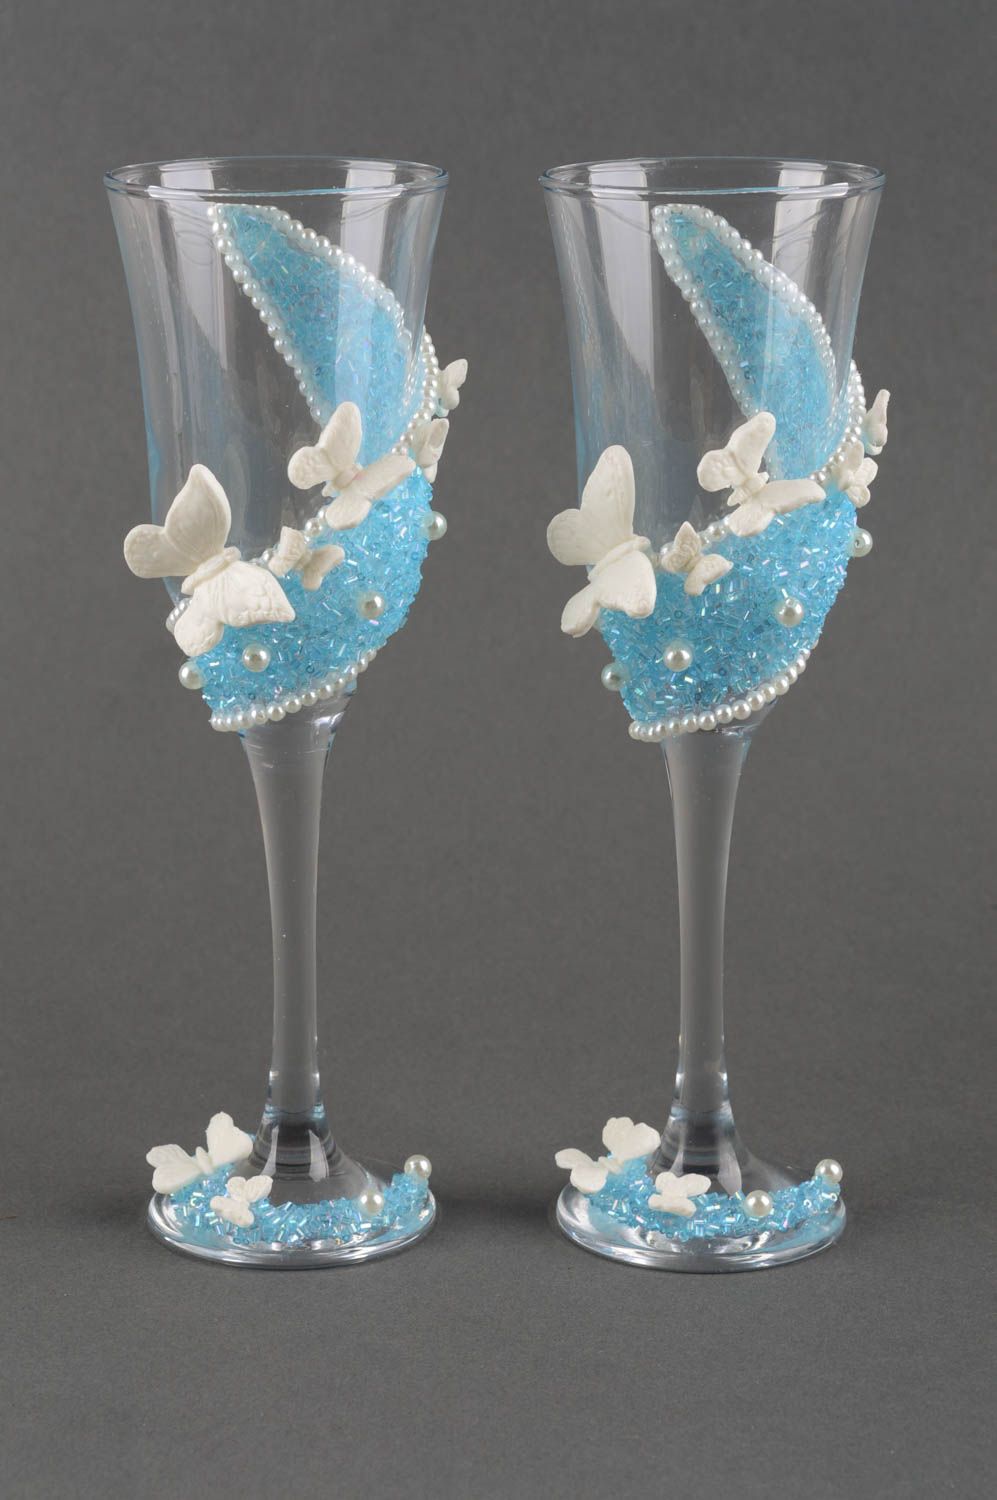 Beautiful handmade wedding glasses wine glass types wedding accessories photo 2